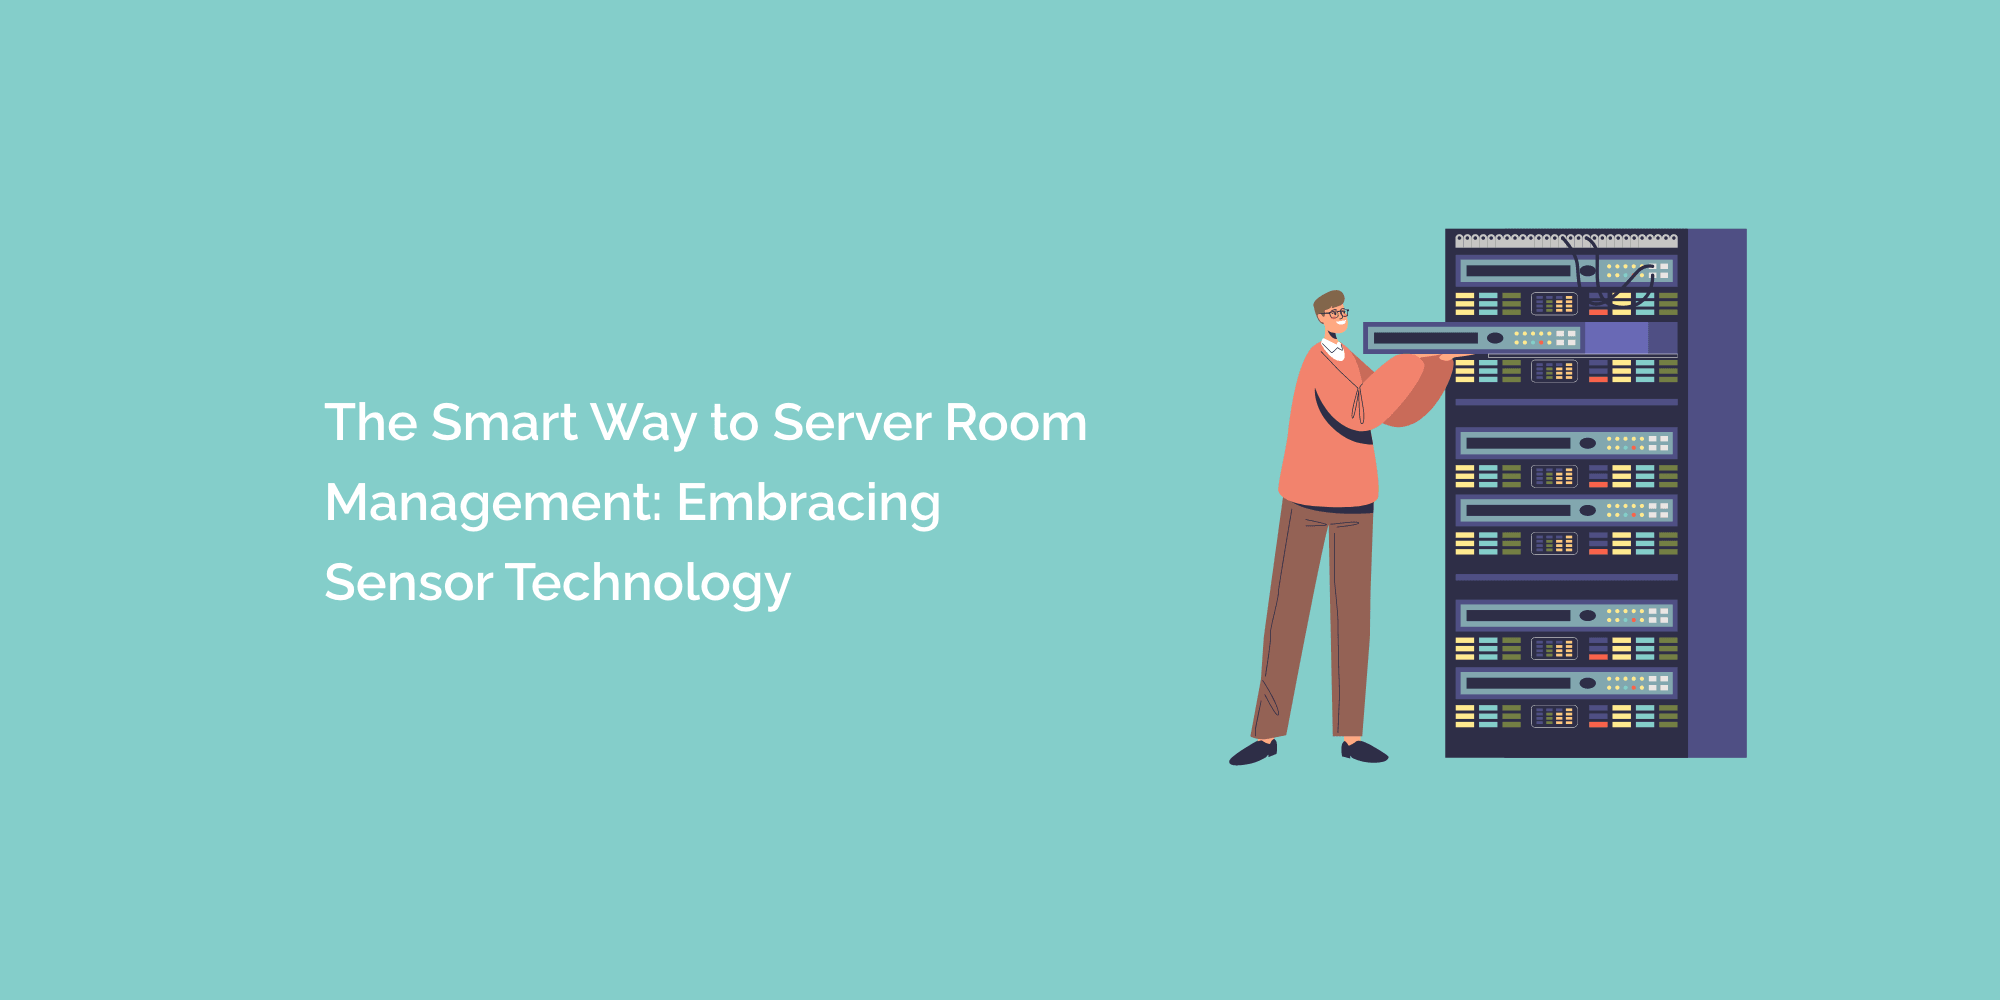 The Smart Way to Server Room Management: Embracing Sensor Technology